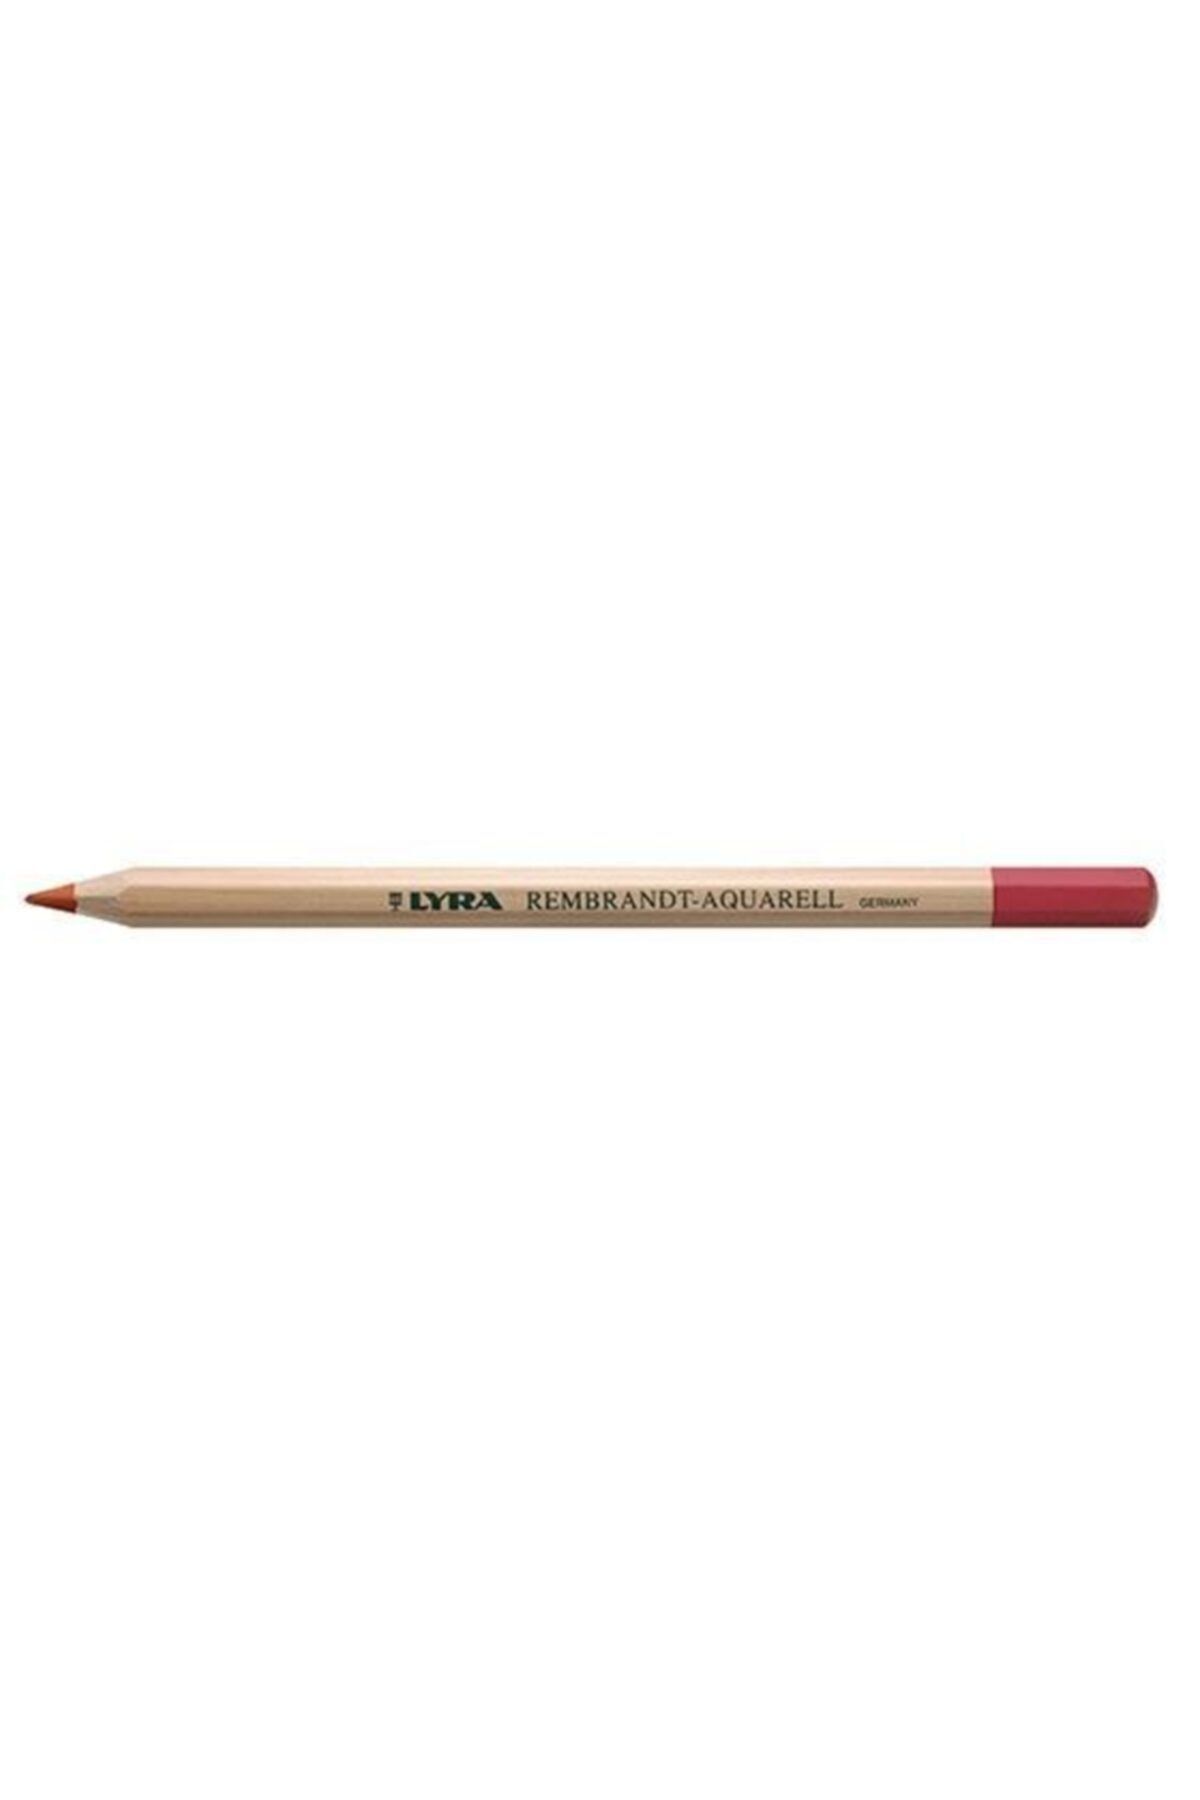 Lyra رامبراند آکوارل مداد رنگی سوخته کارمین L2010093